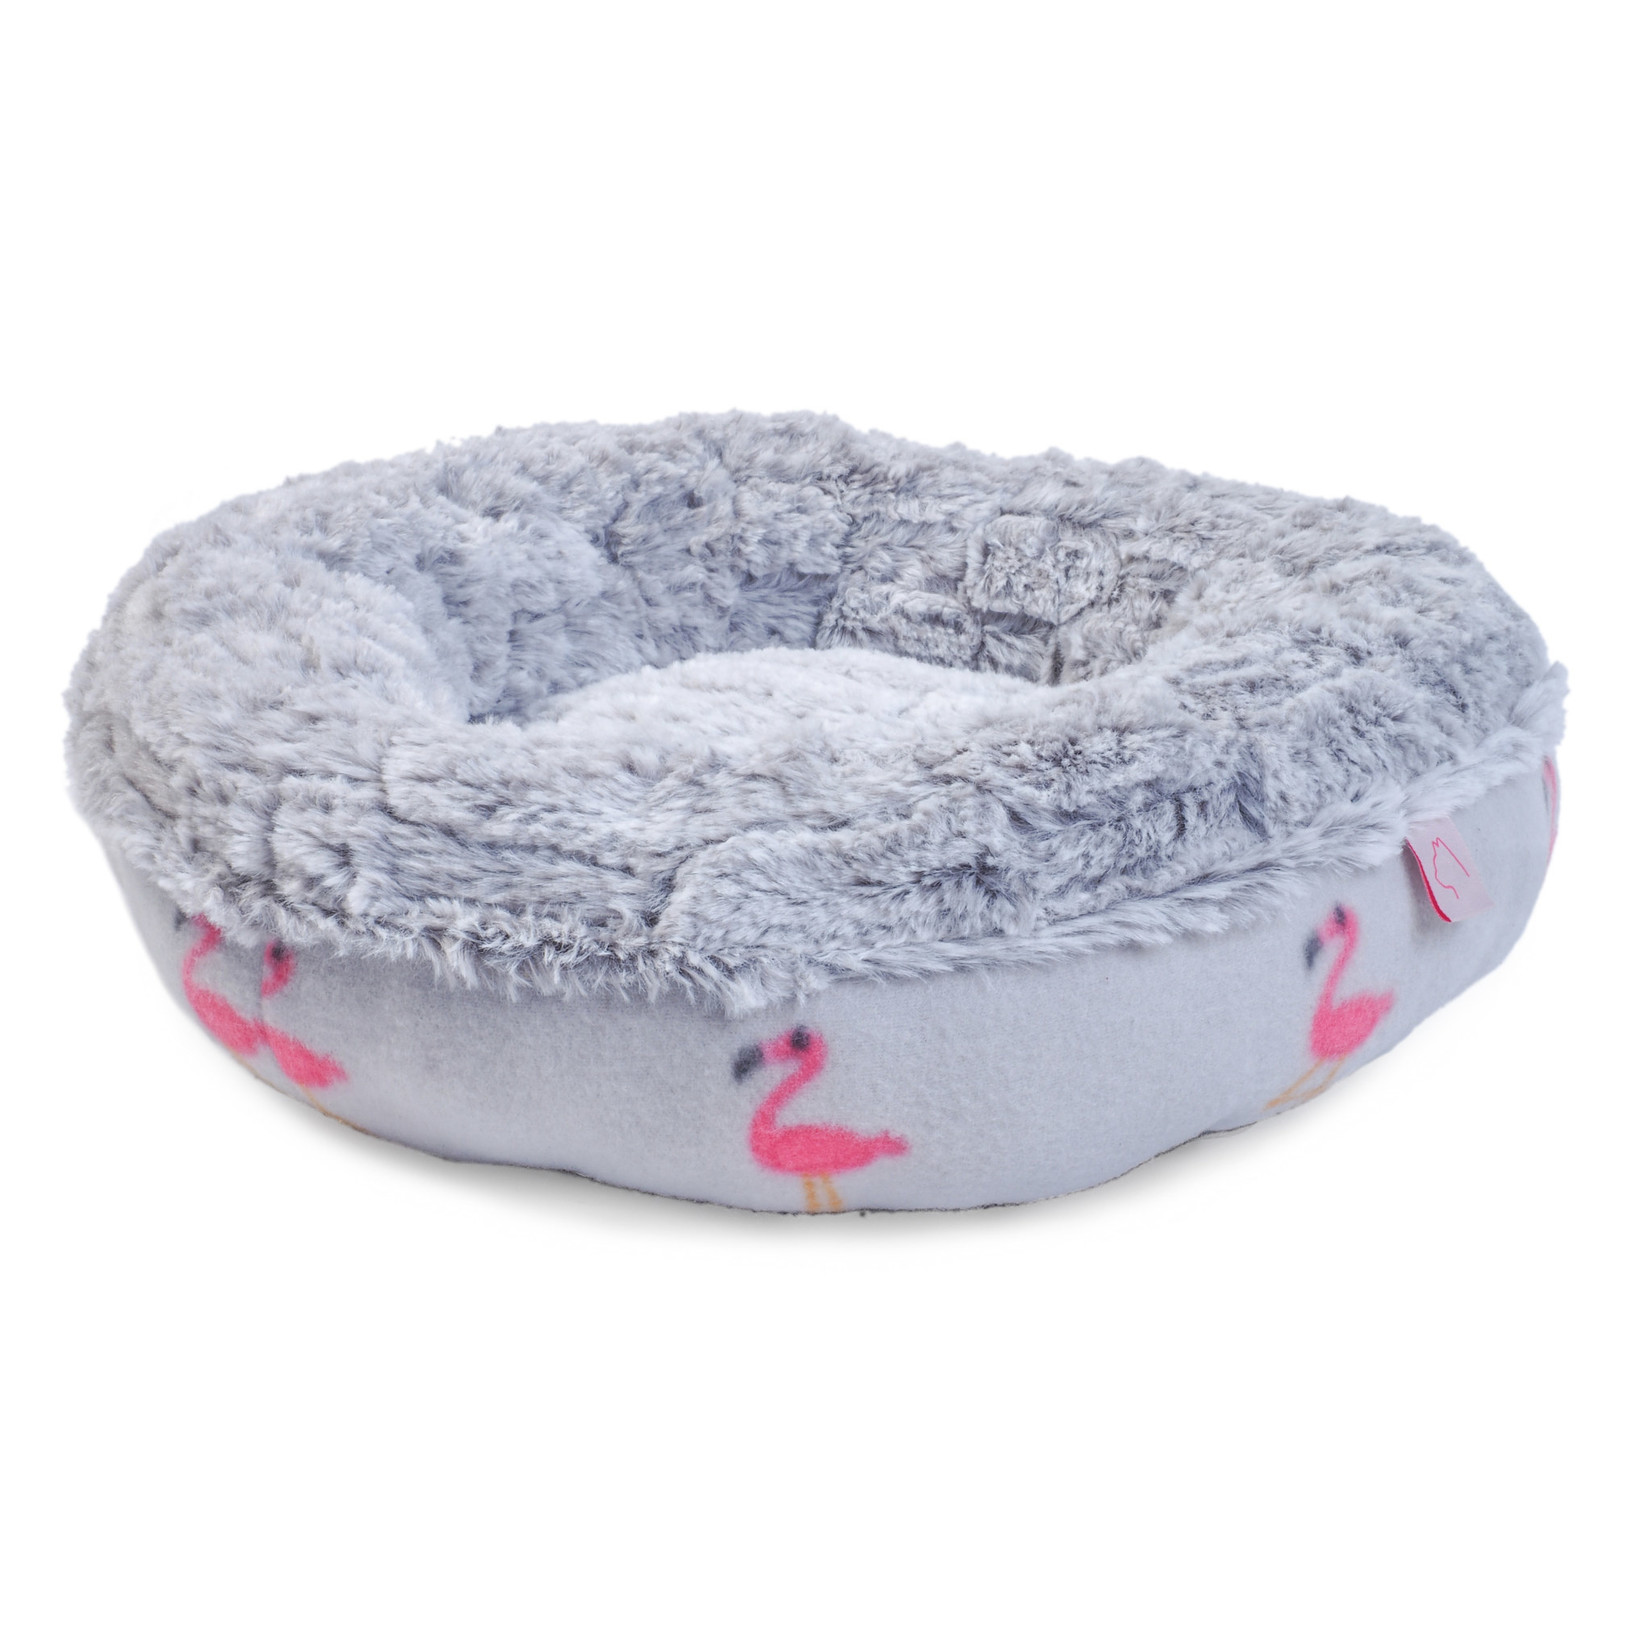 Zöon Floating Flamingo Doughnut Cat Bed, 45 x 45 x 12cm